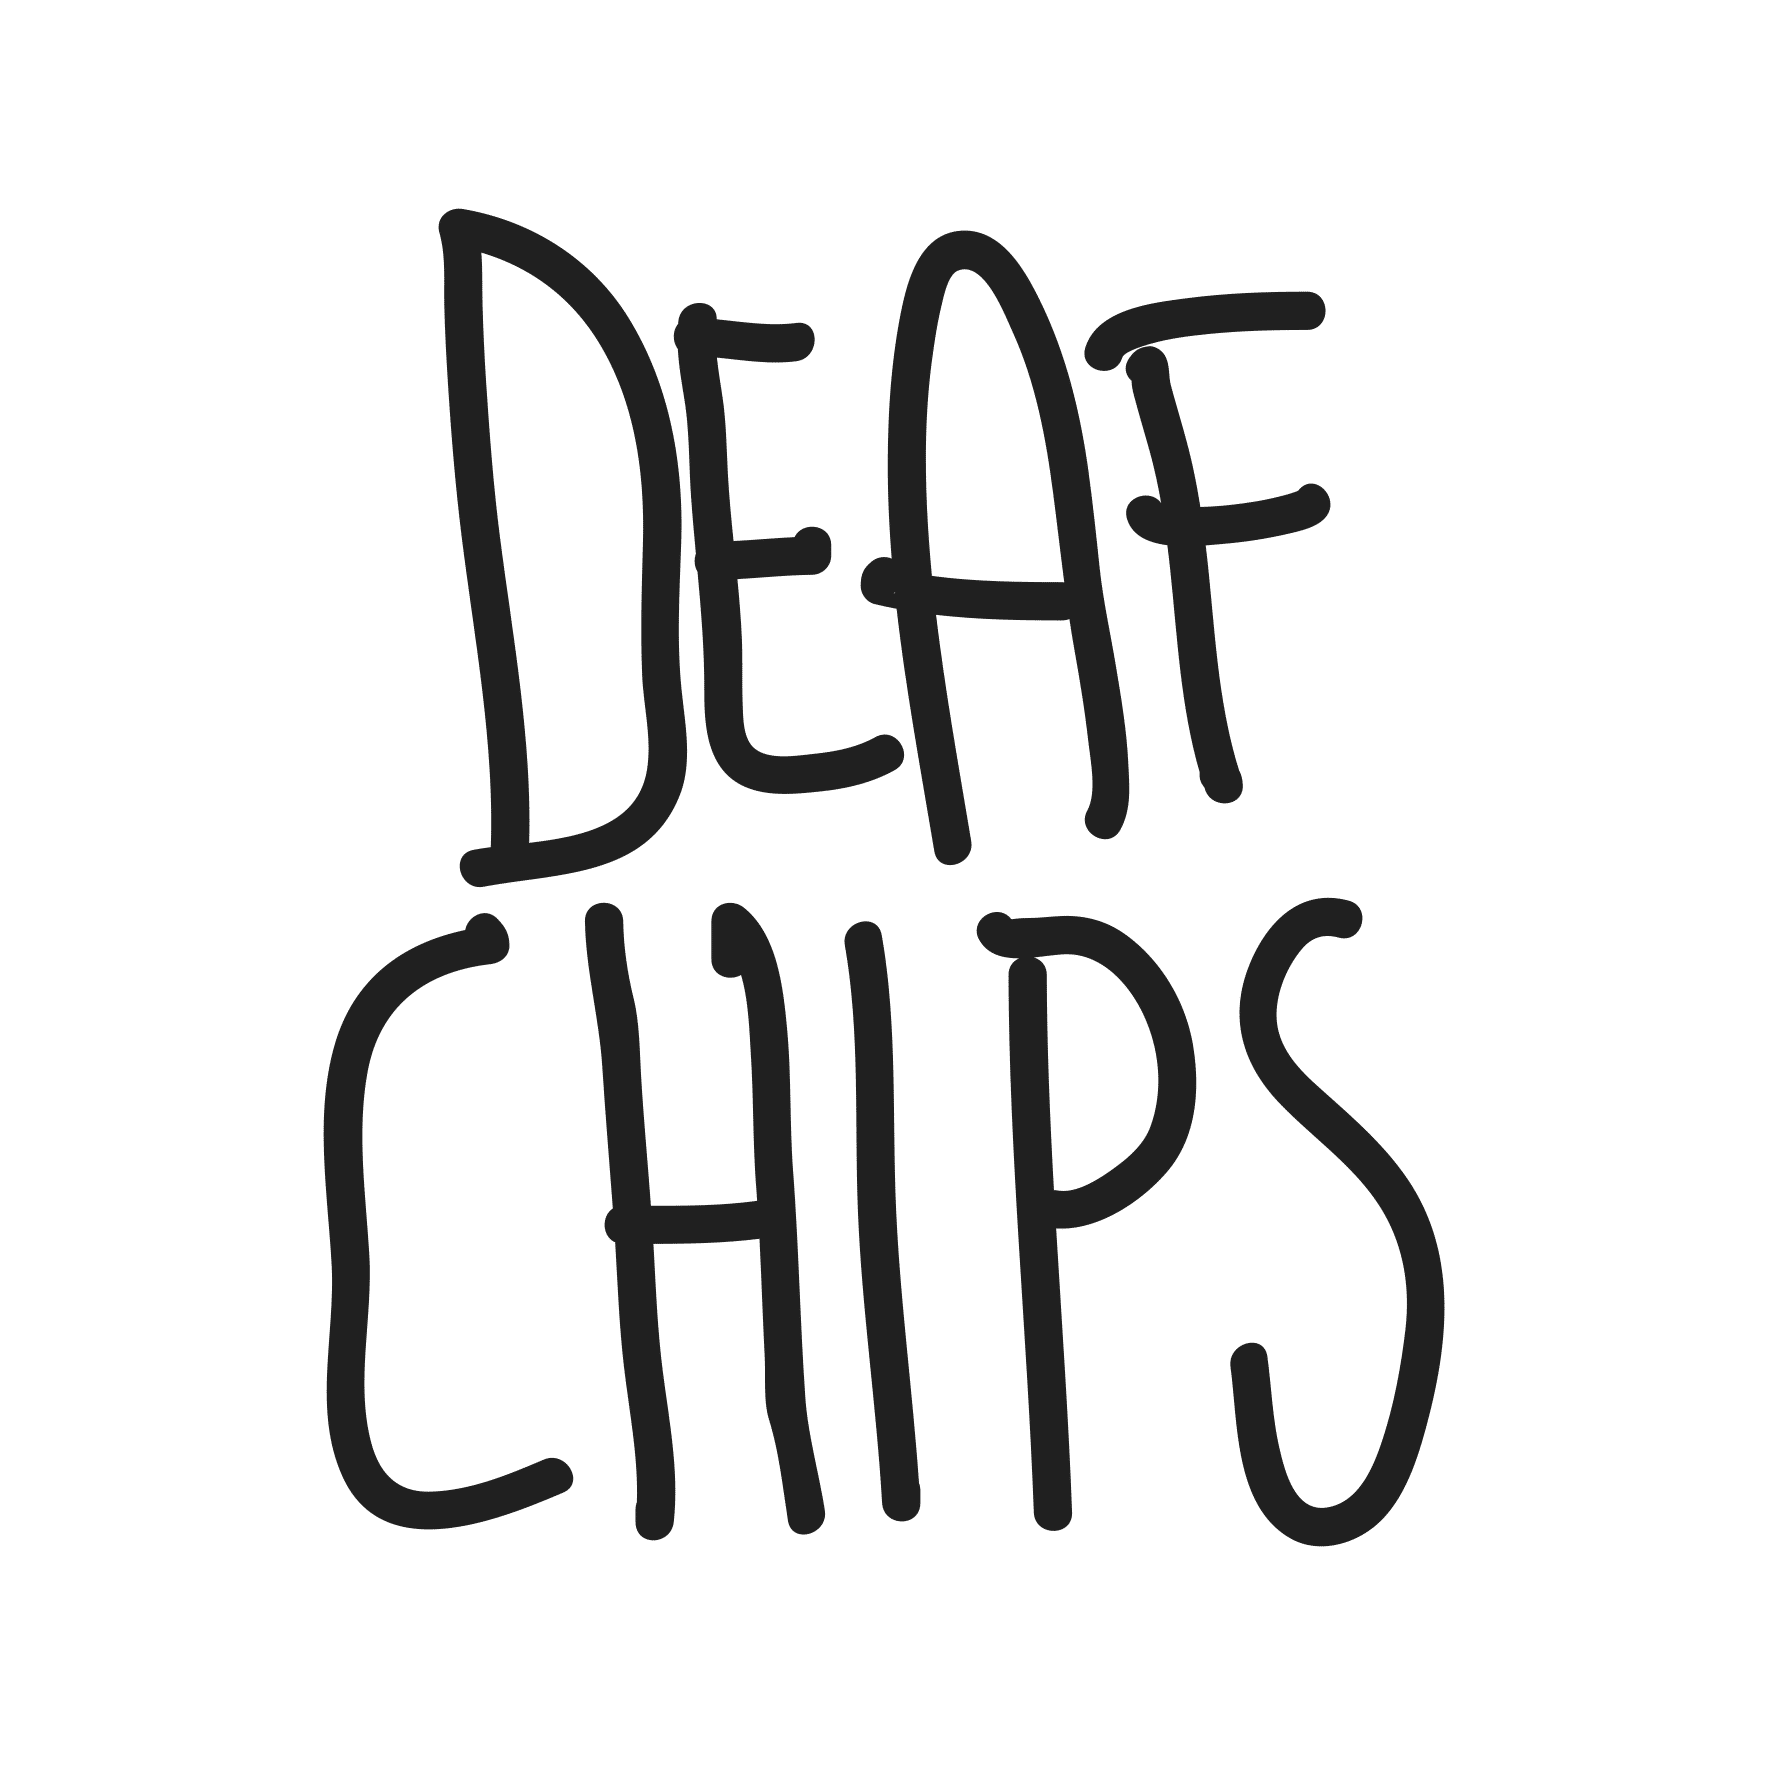 Deafchips